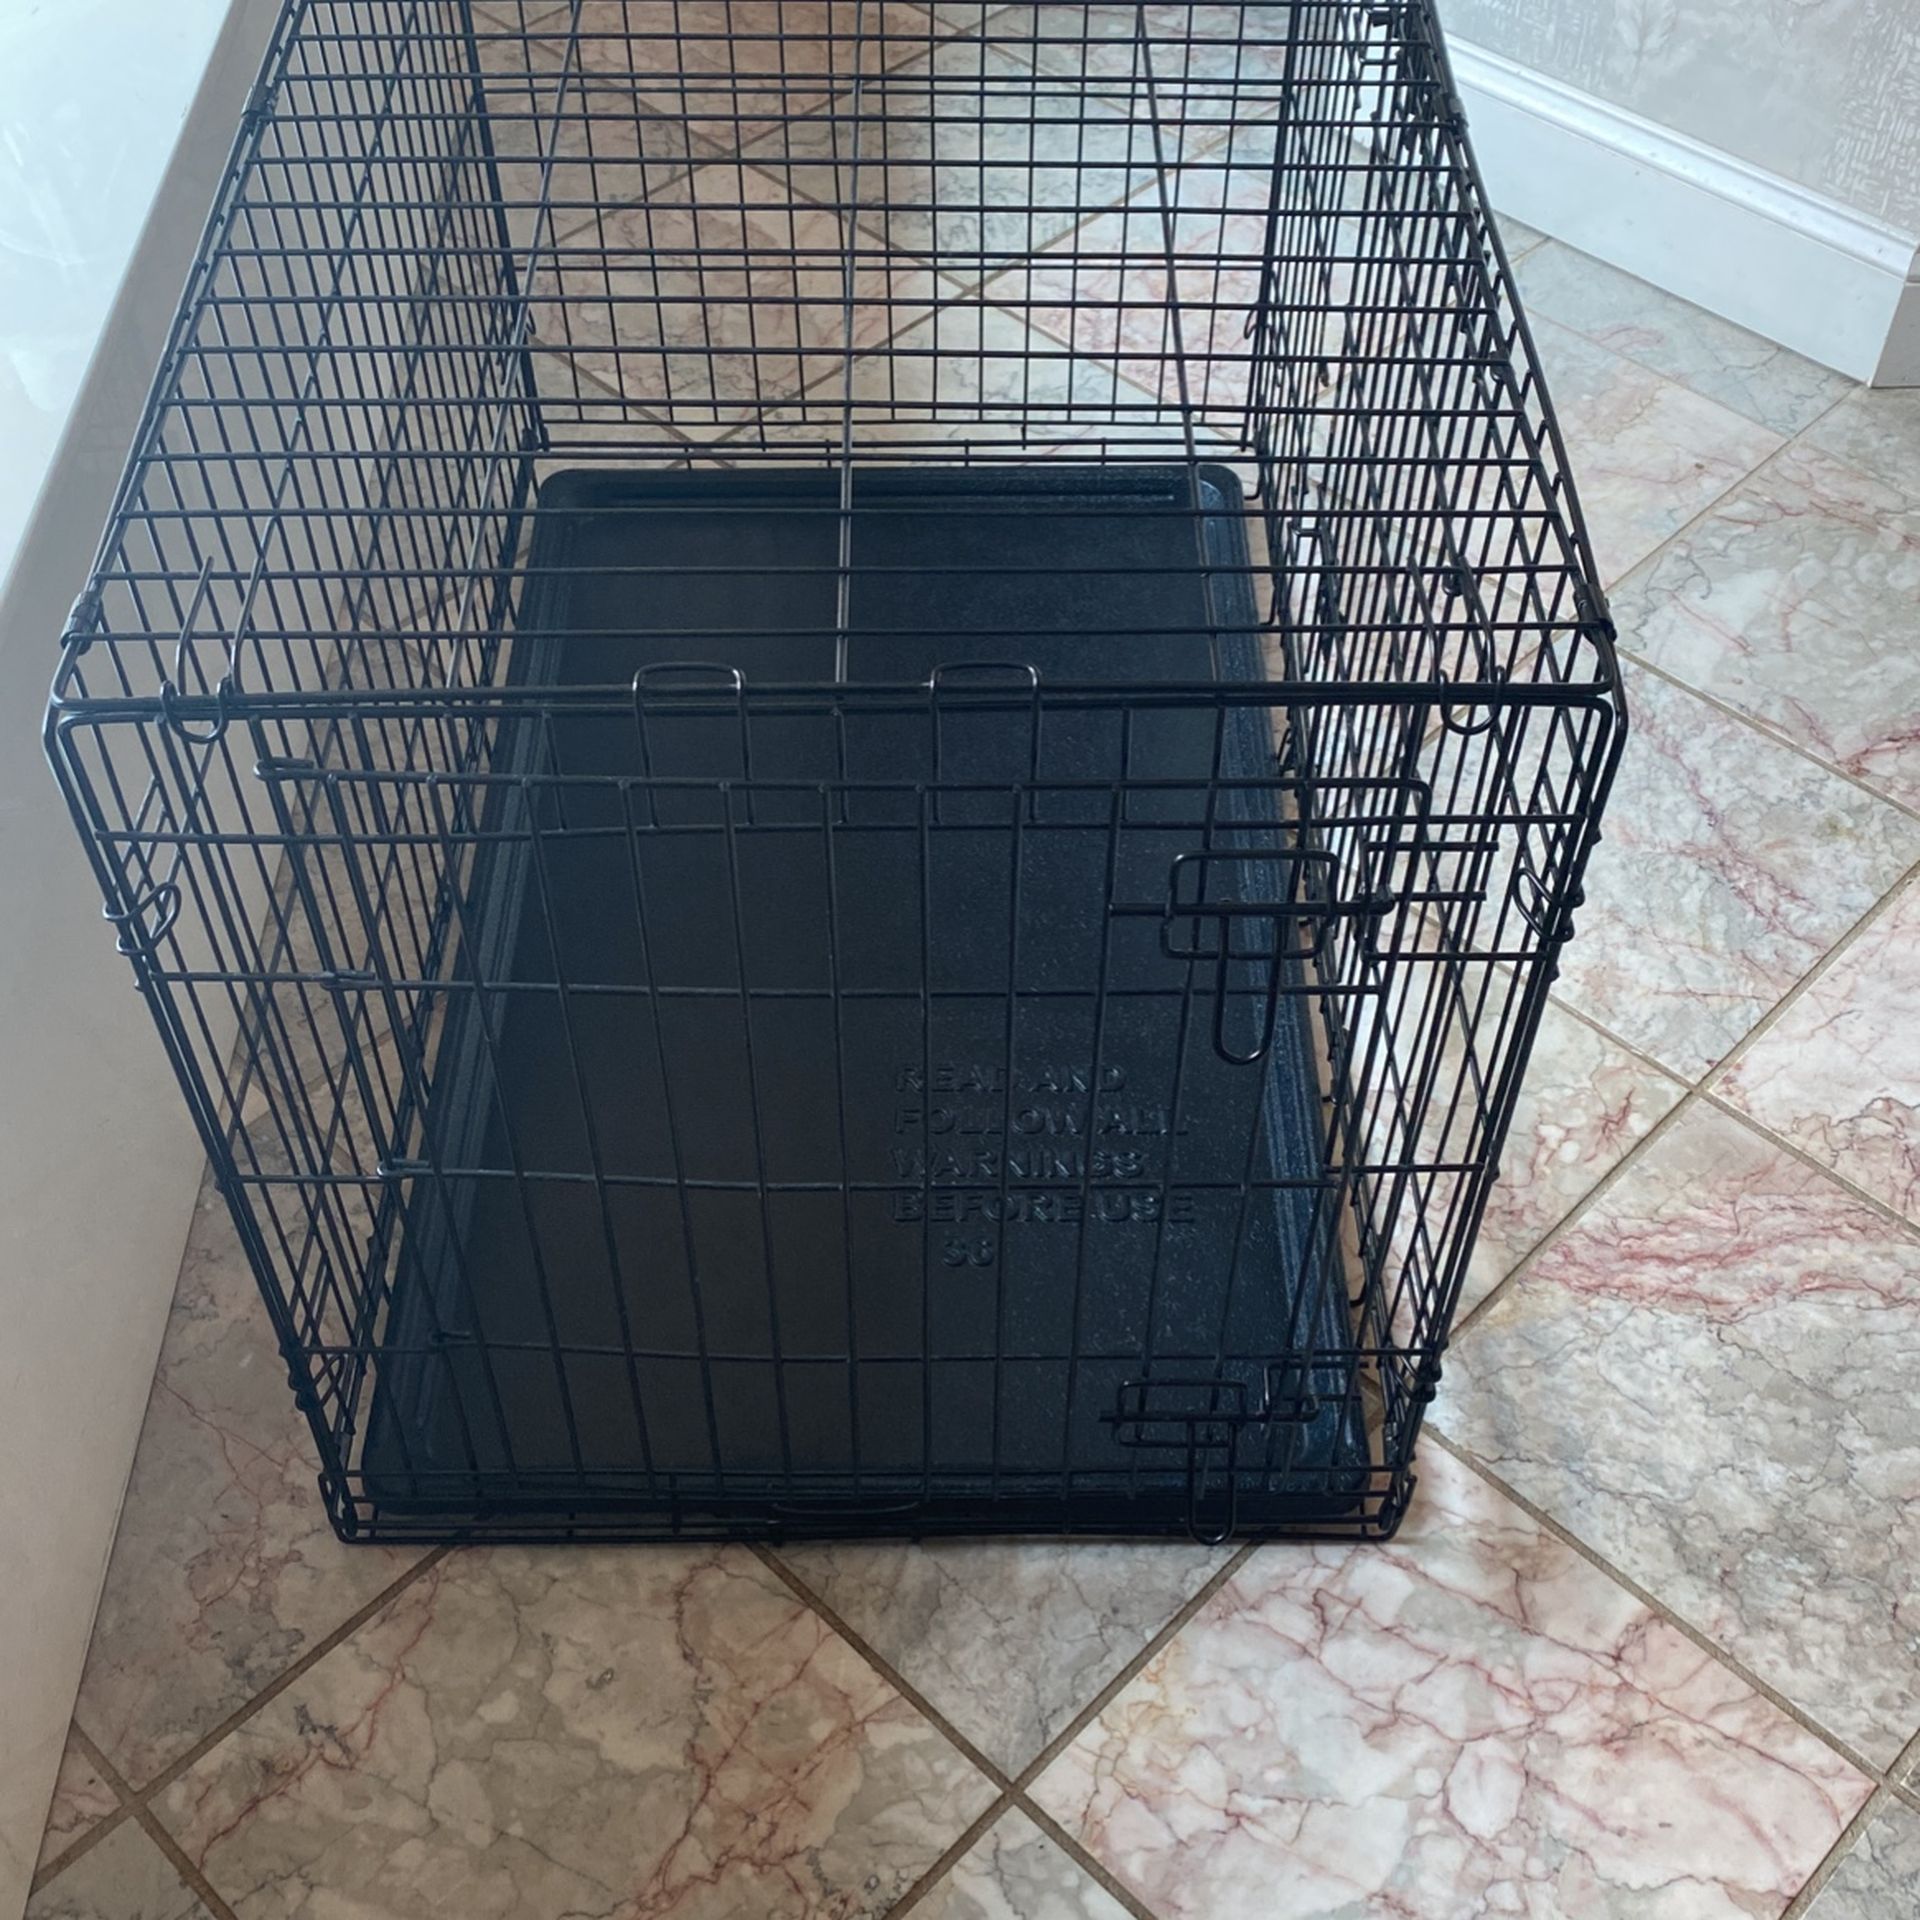 Medium Size Dog Crate